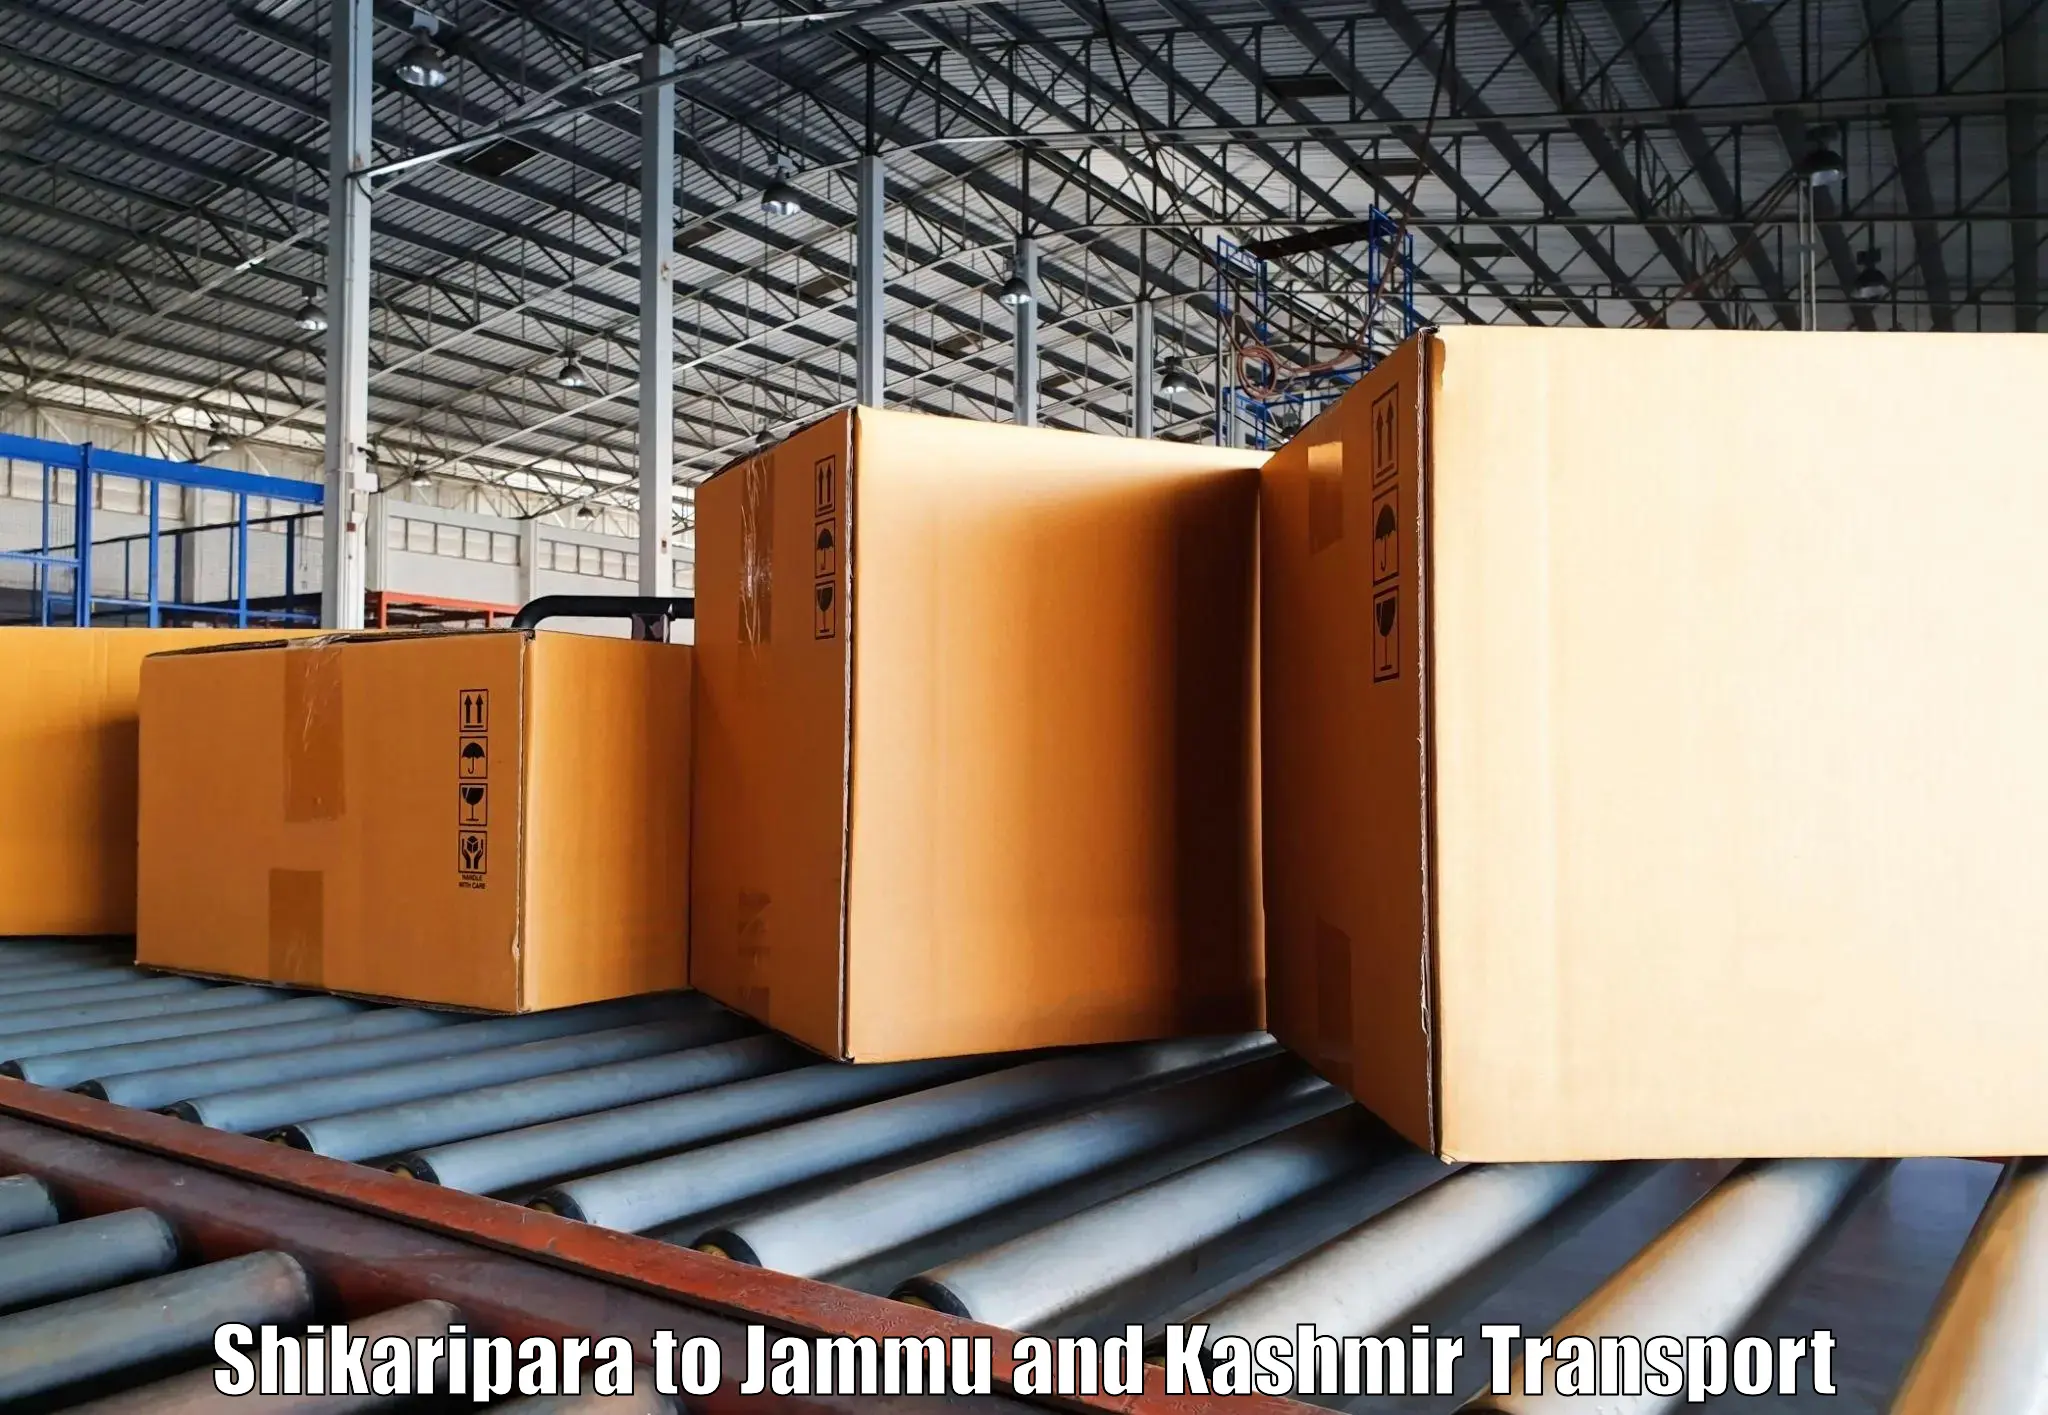 Shipping partner Shikaripara to Kargil